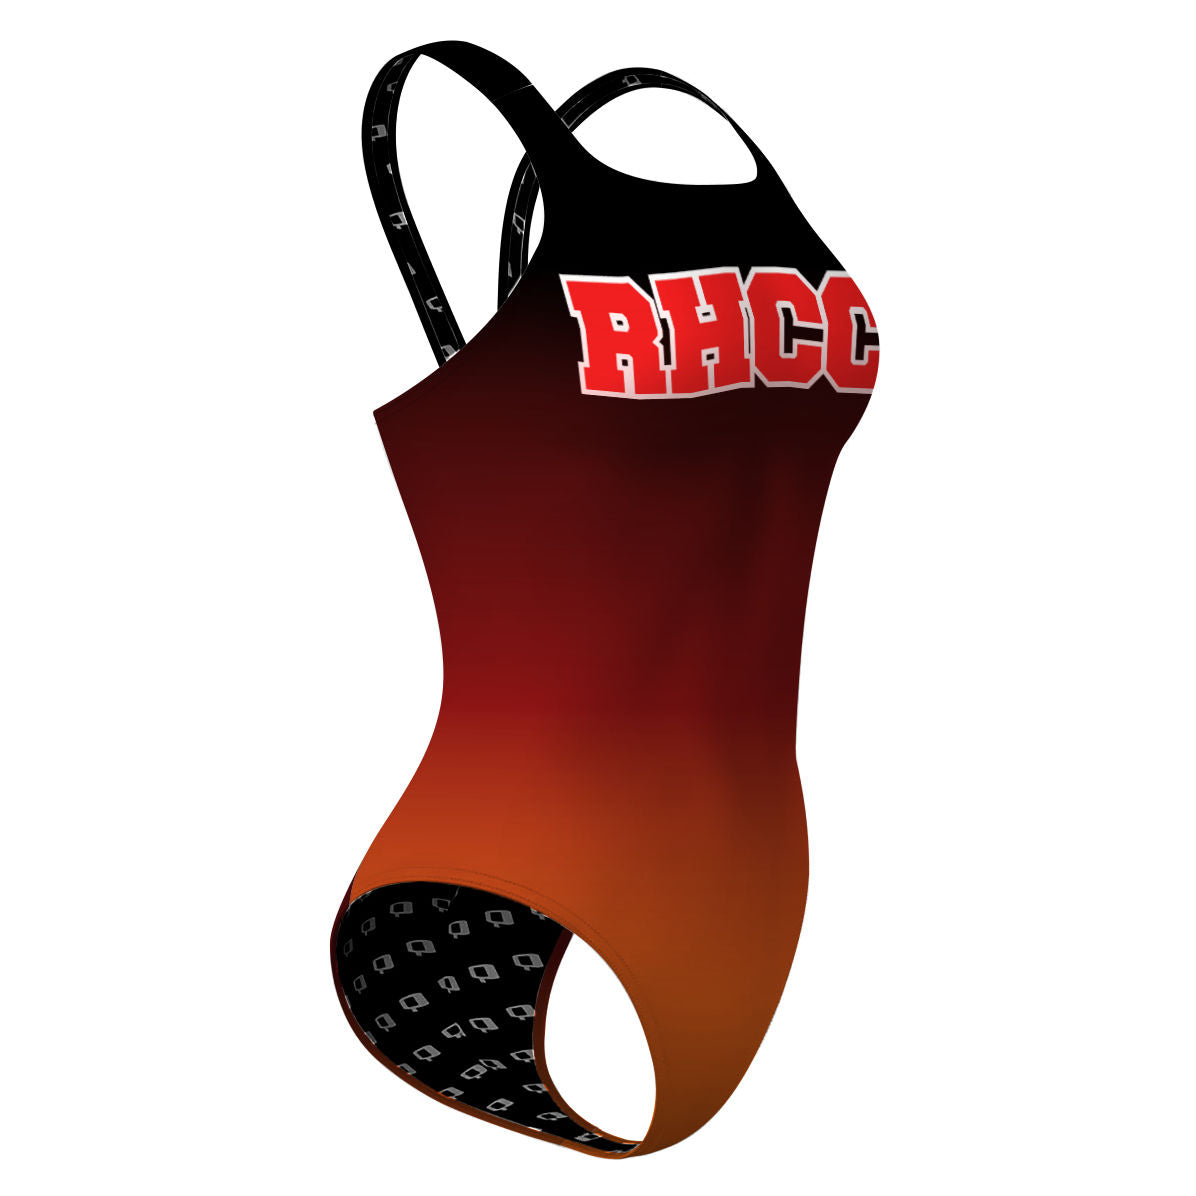 RHCC - Classic Strap Swimsuit